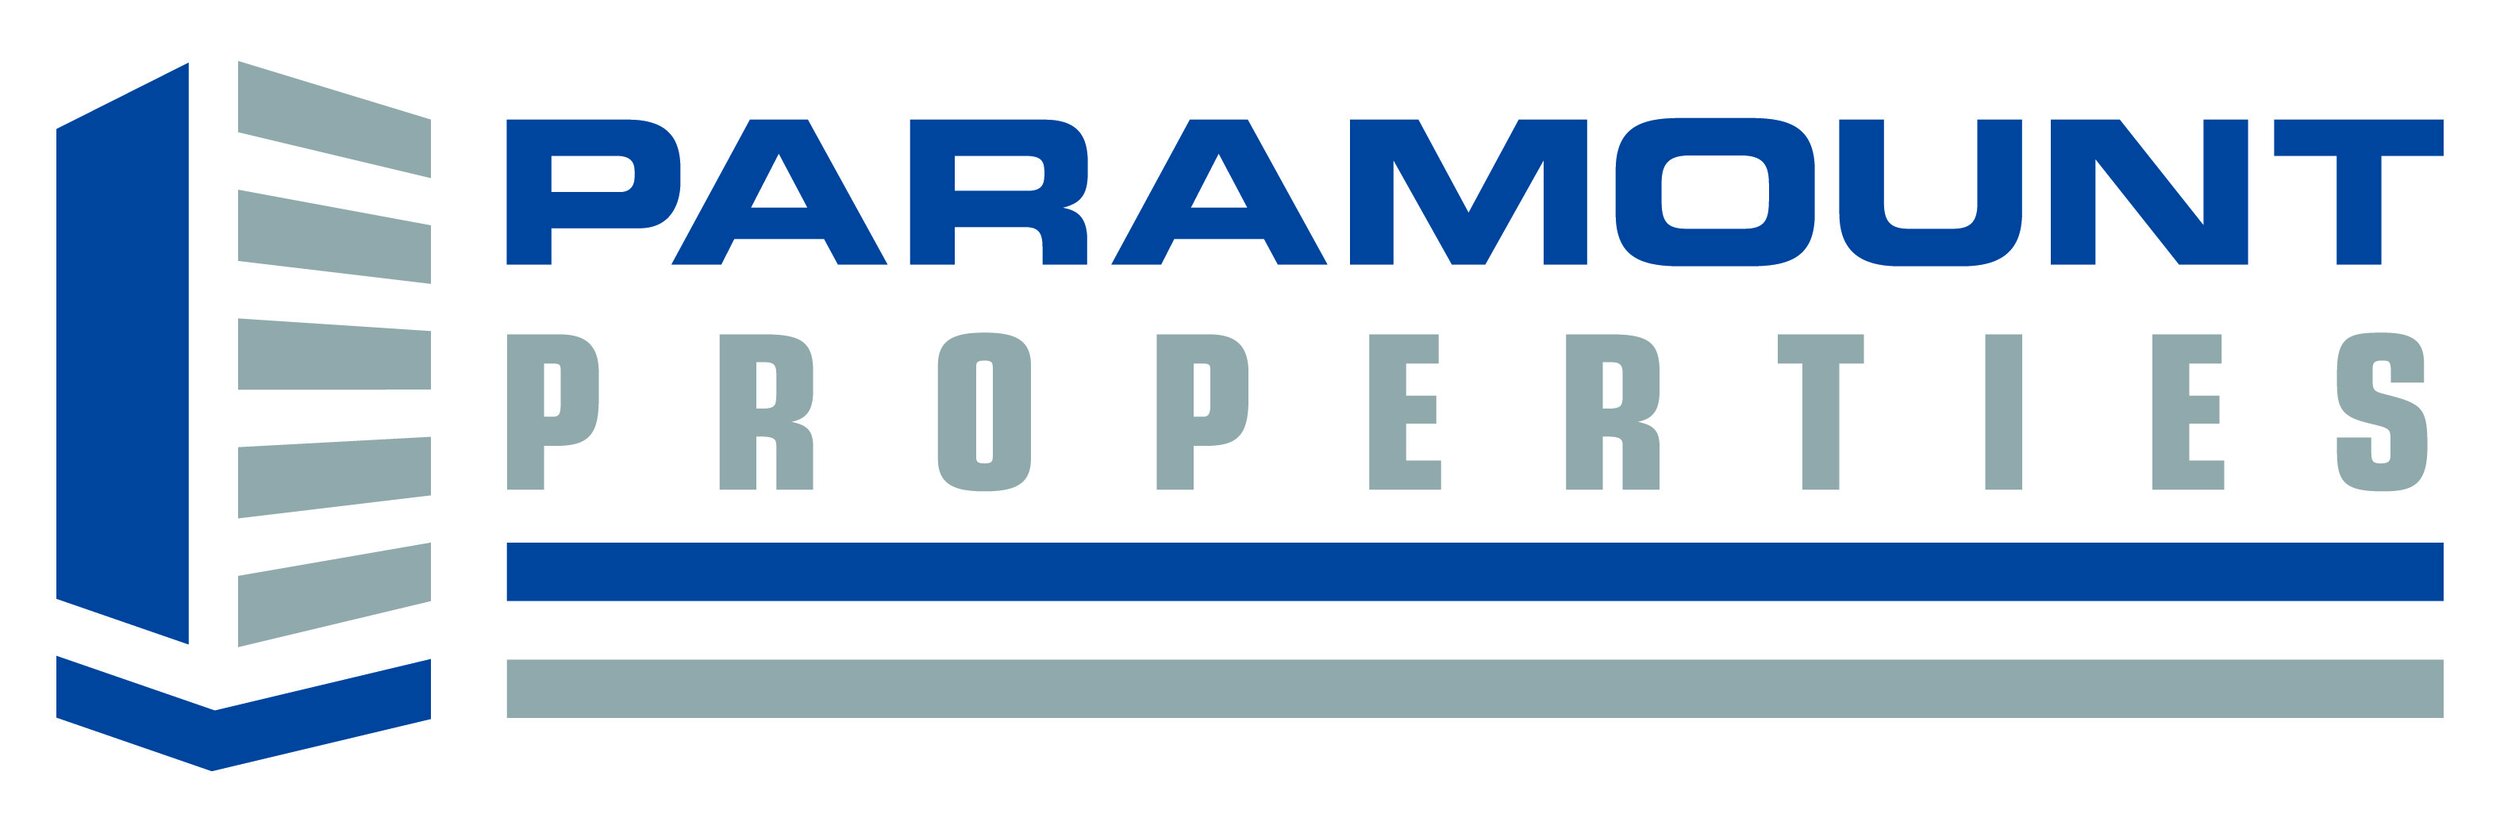 Paramount Logo 003 (1).jpg